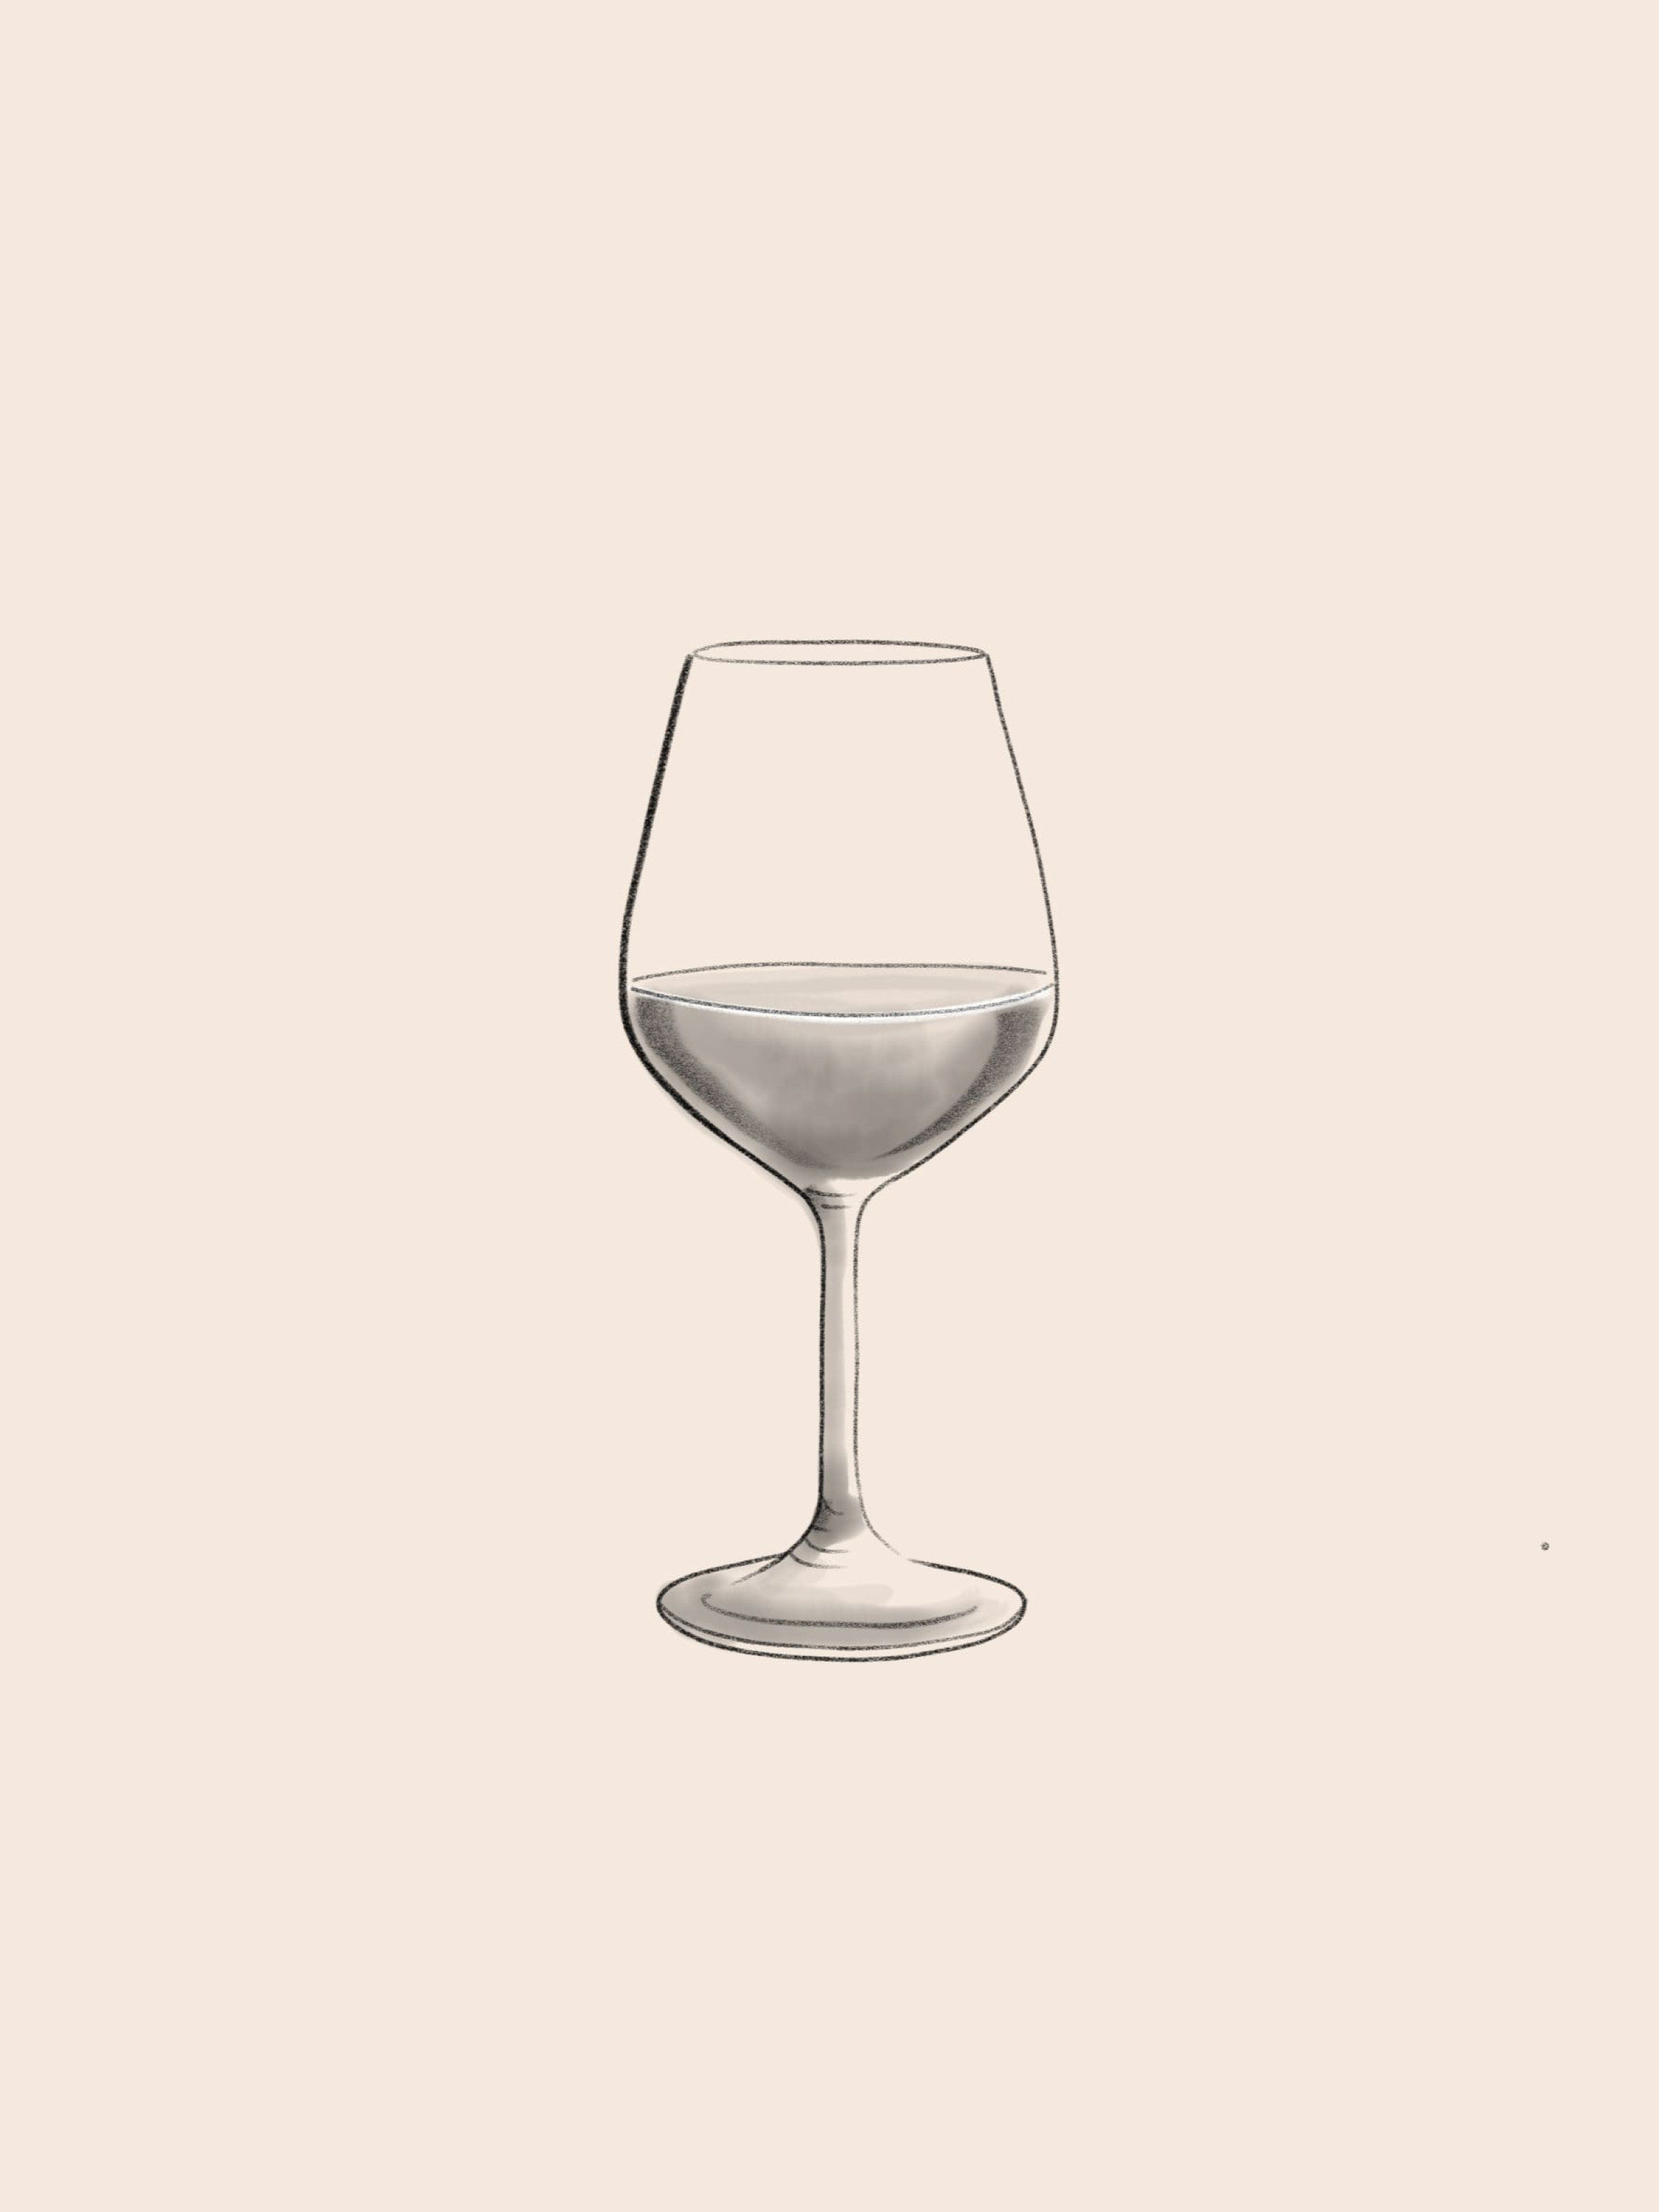 Wine glass art work